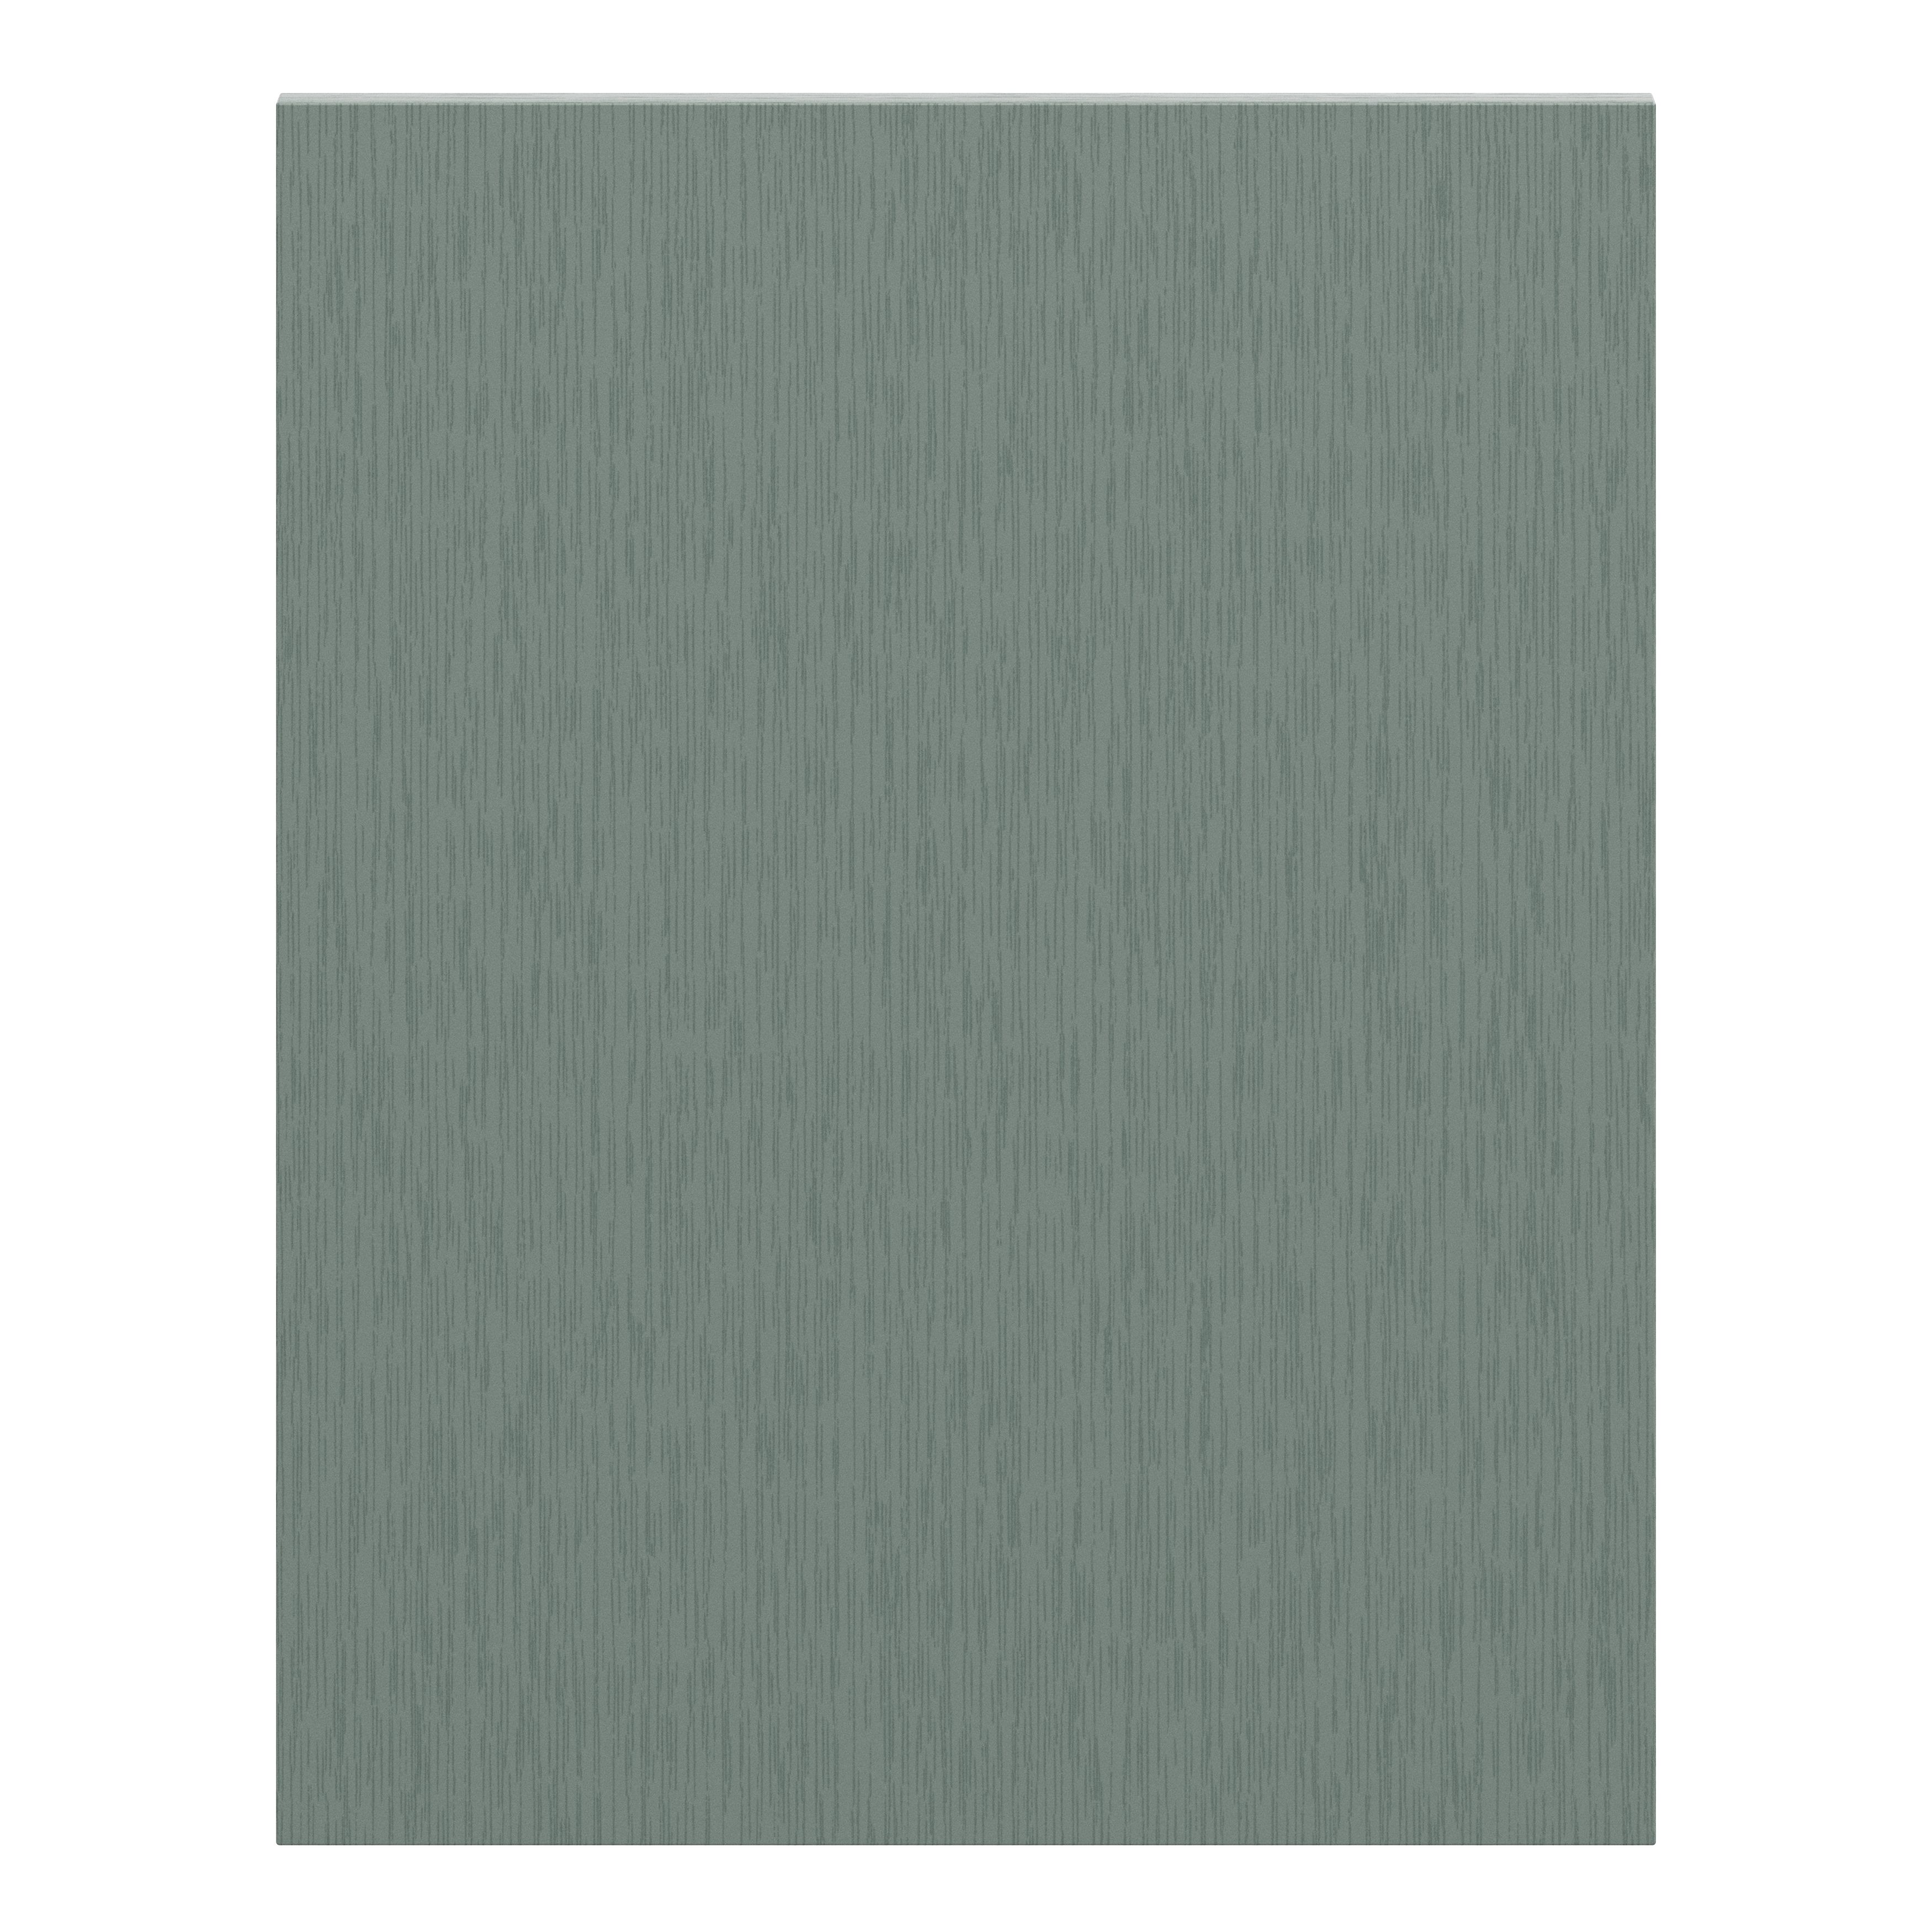 GoodHome Alpinia Matt Green Painted Wood Effect Shaker Standard Base Drawer end panel (H)720mm (W)570mm